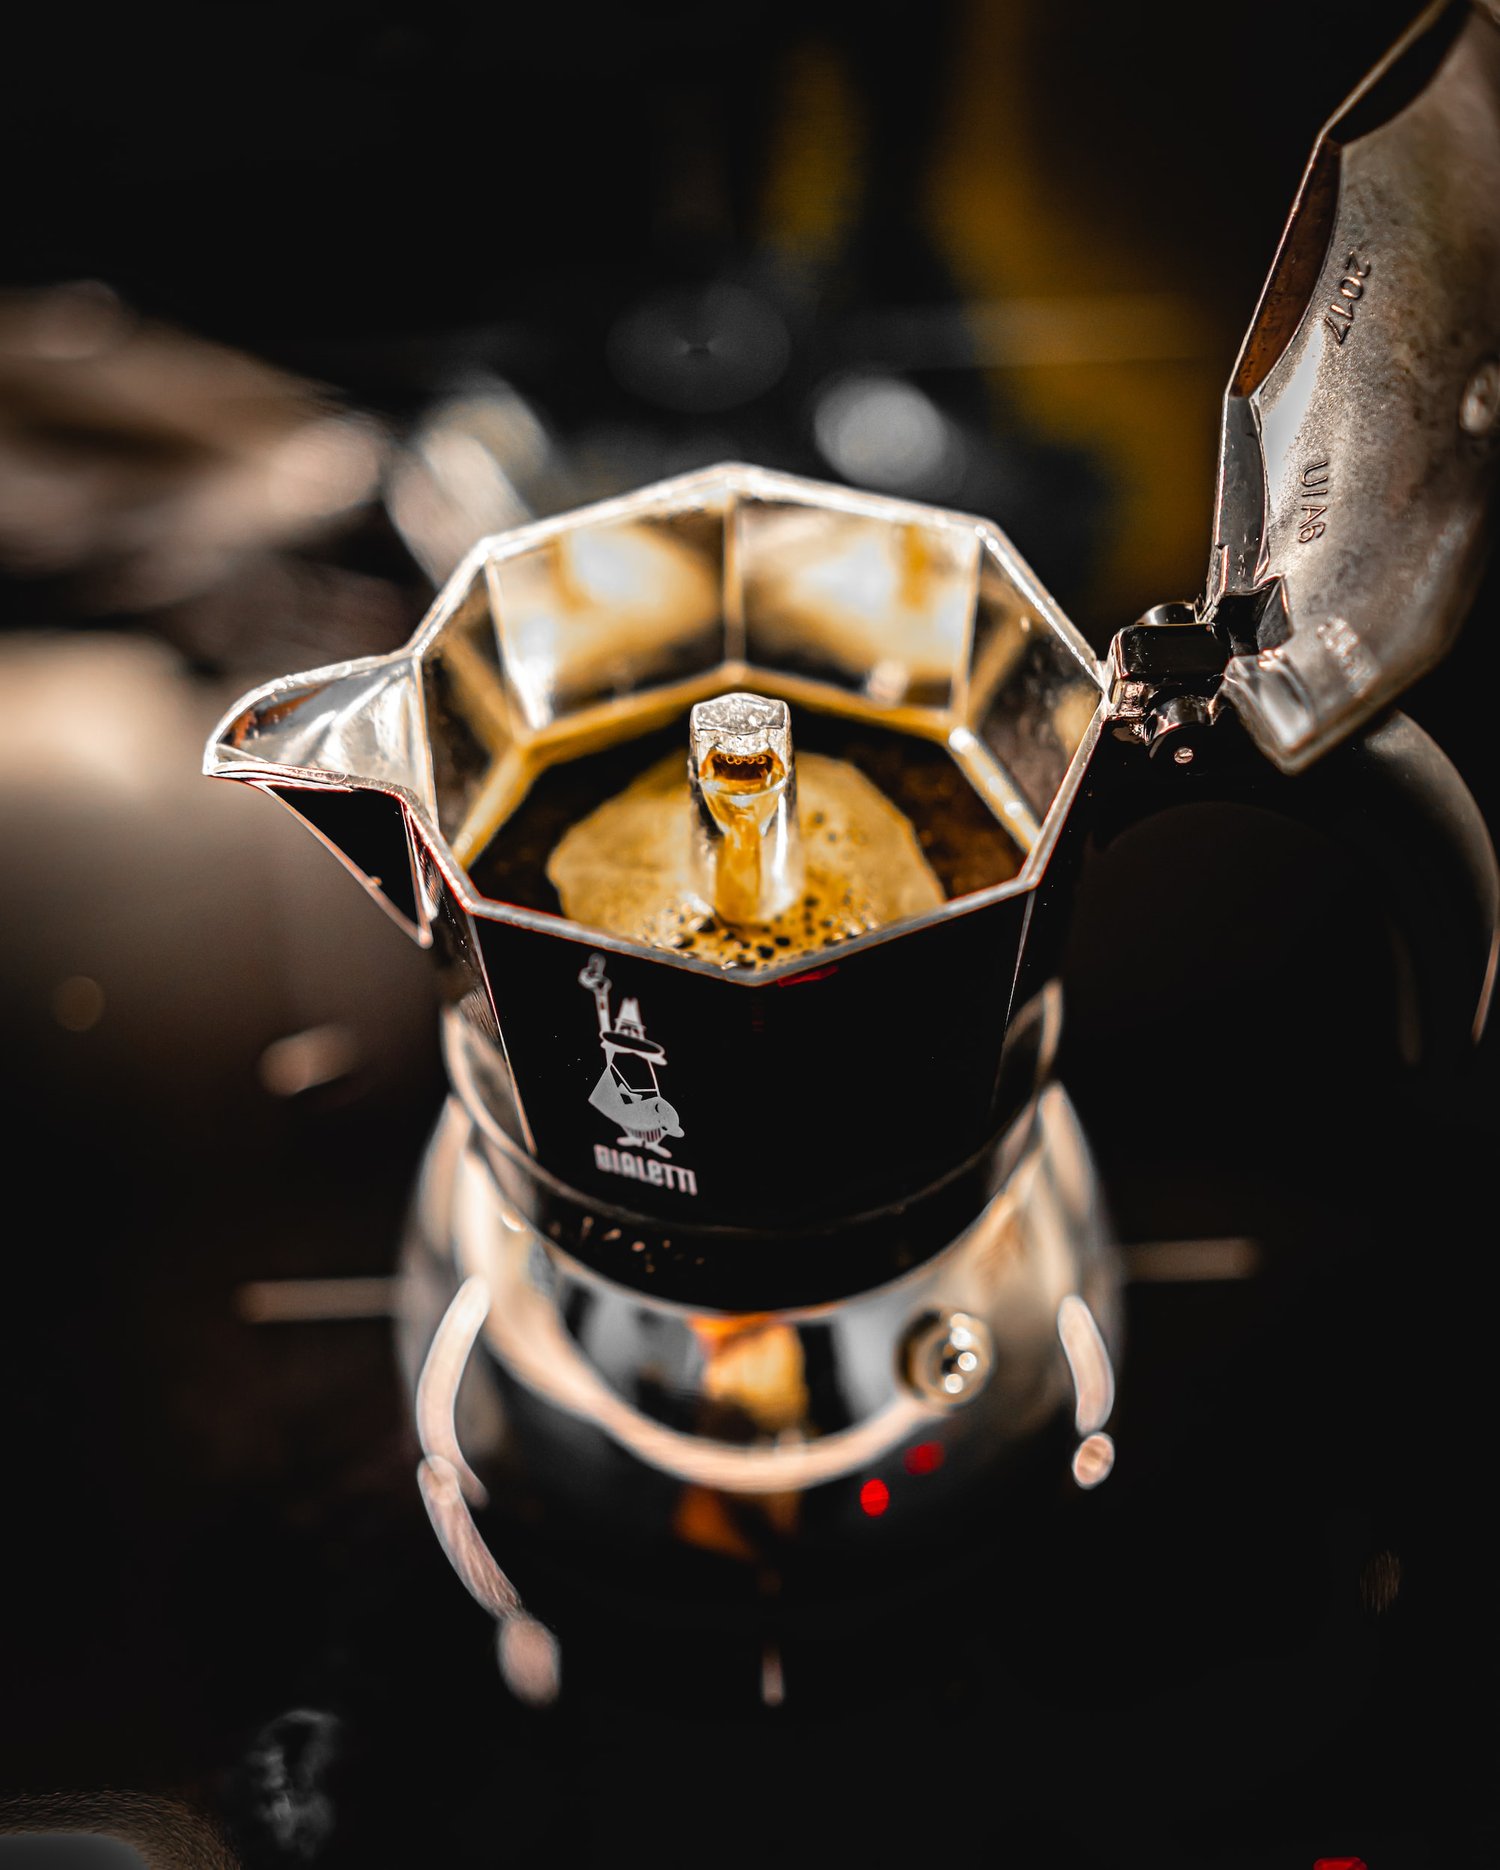 How to Use a Moka Pot, AKA the Stovetop Espresso Maker